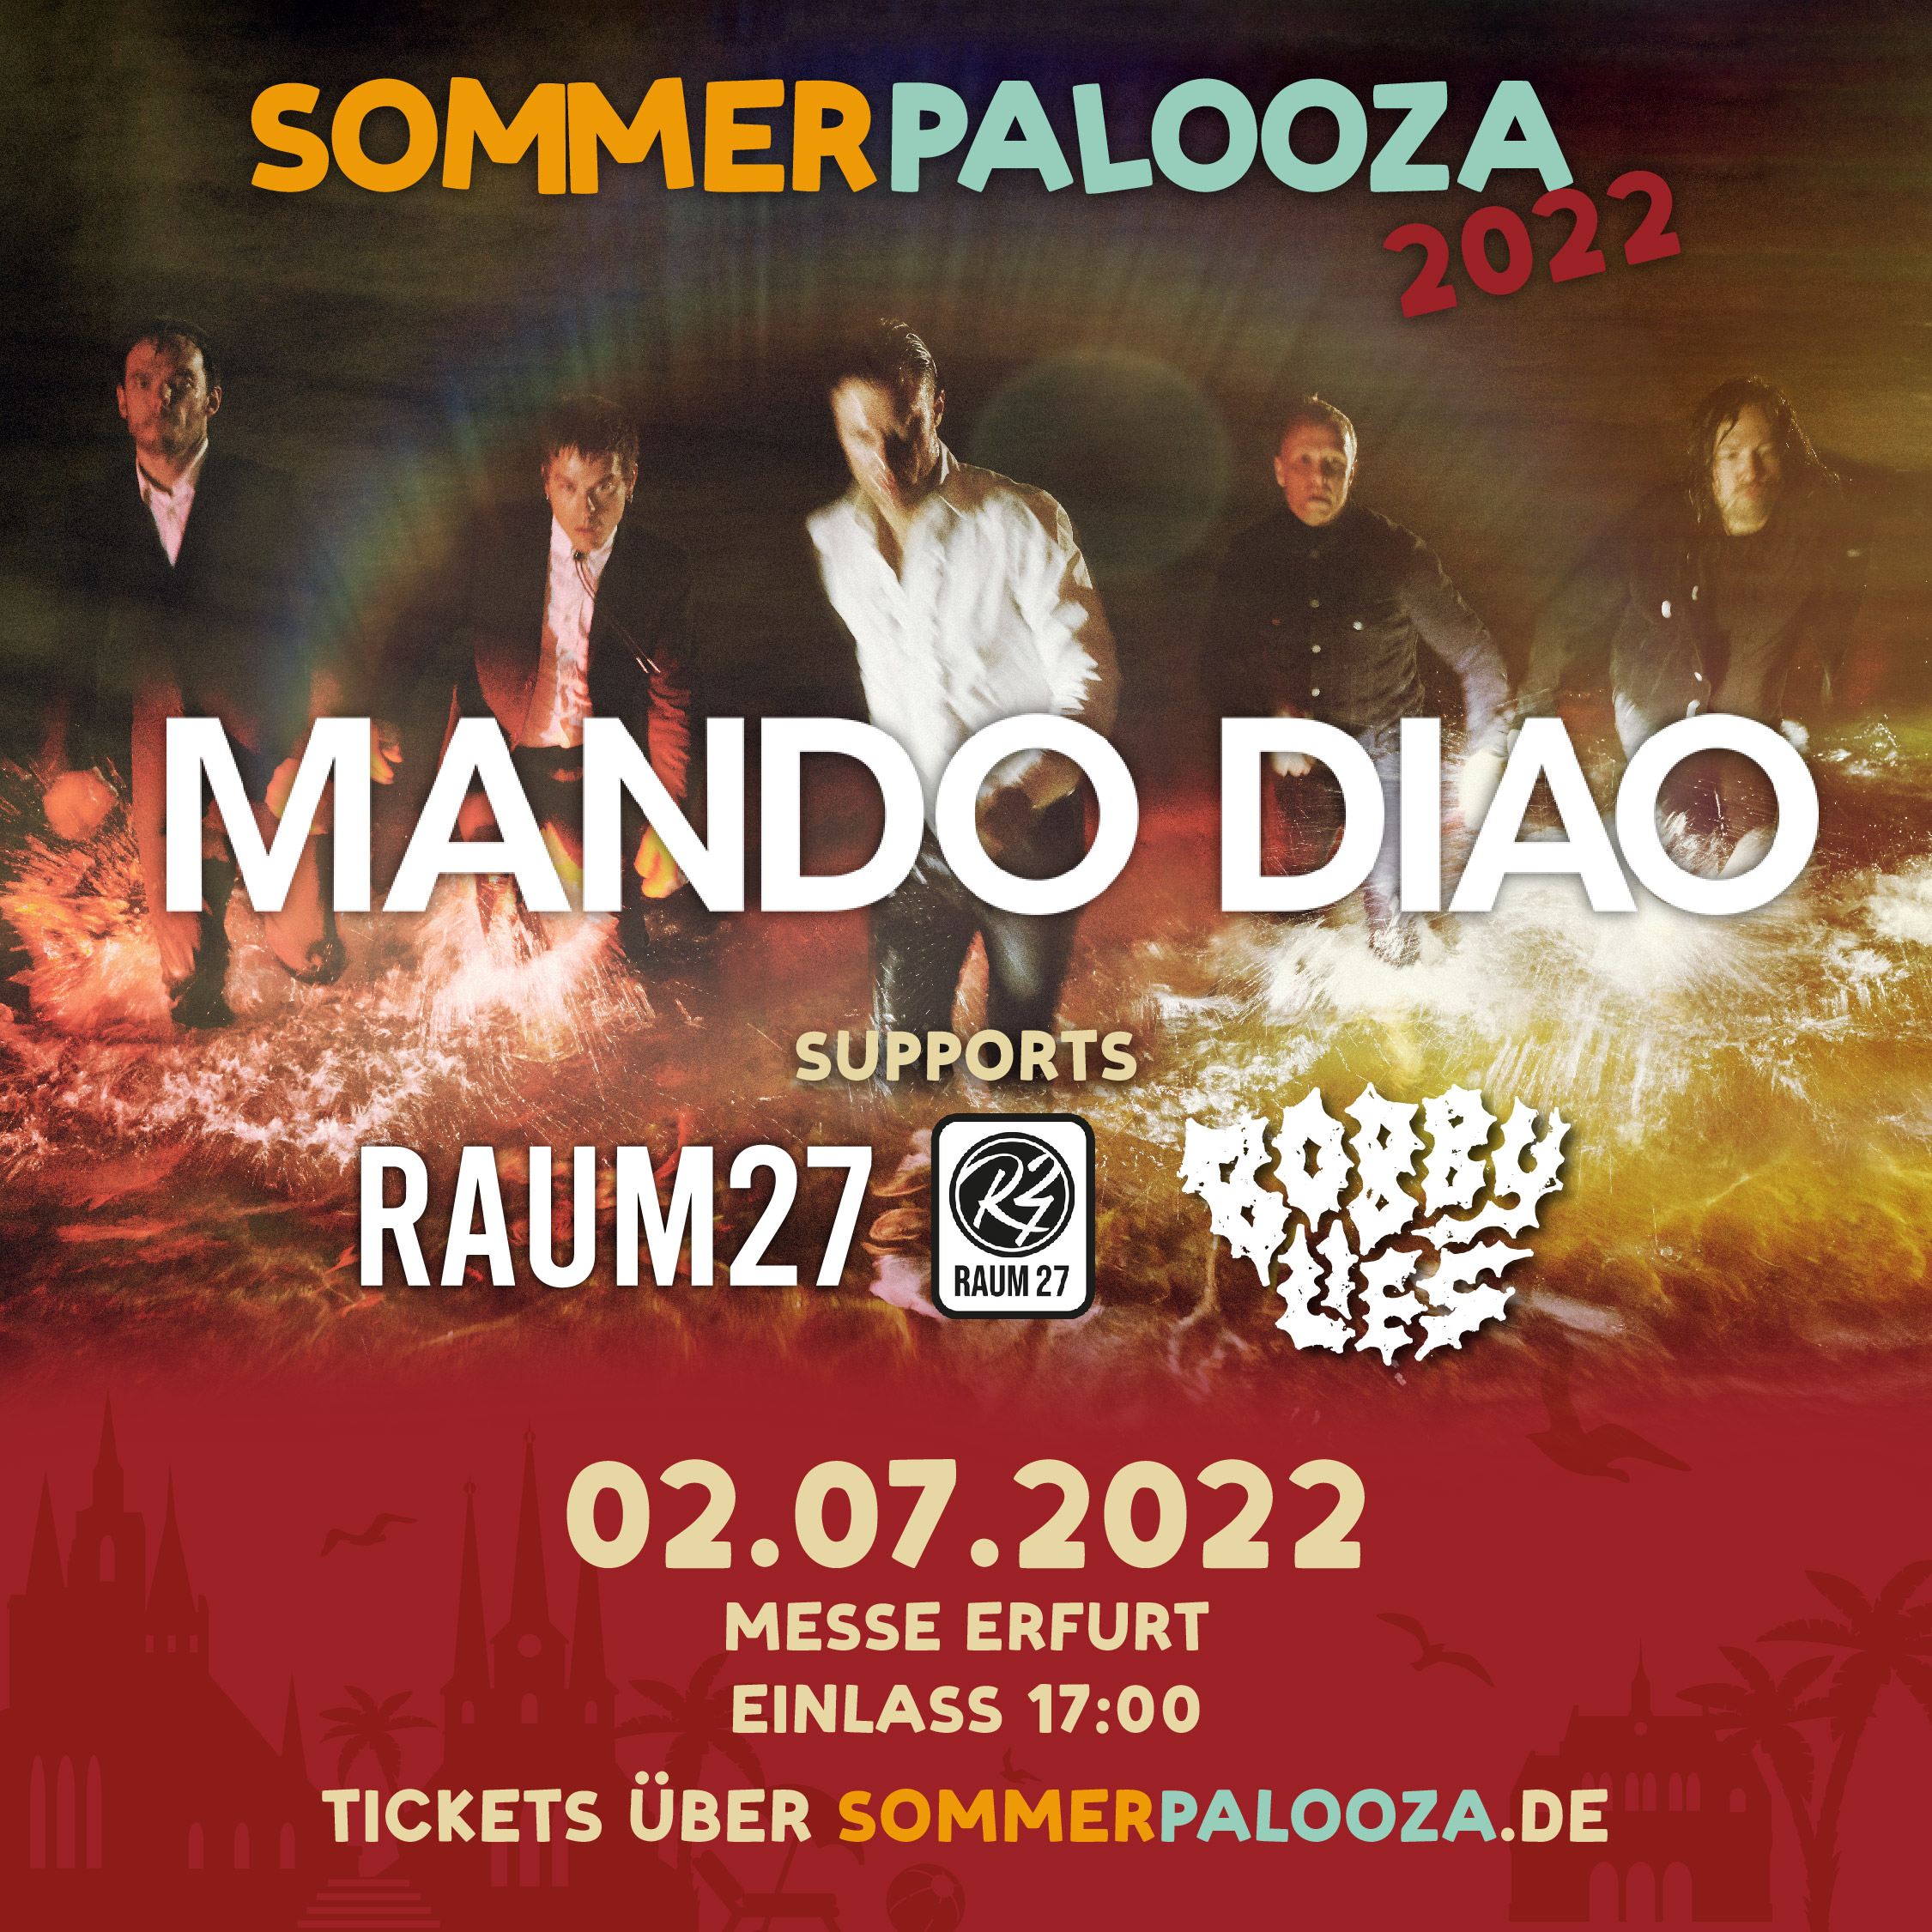 Sommerpalooza Mando Diao RAUM27 Bobby Lies Erfurt Festival